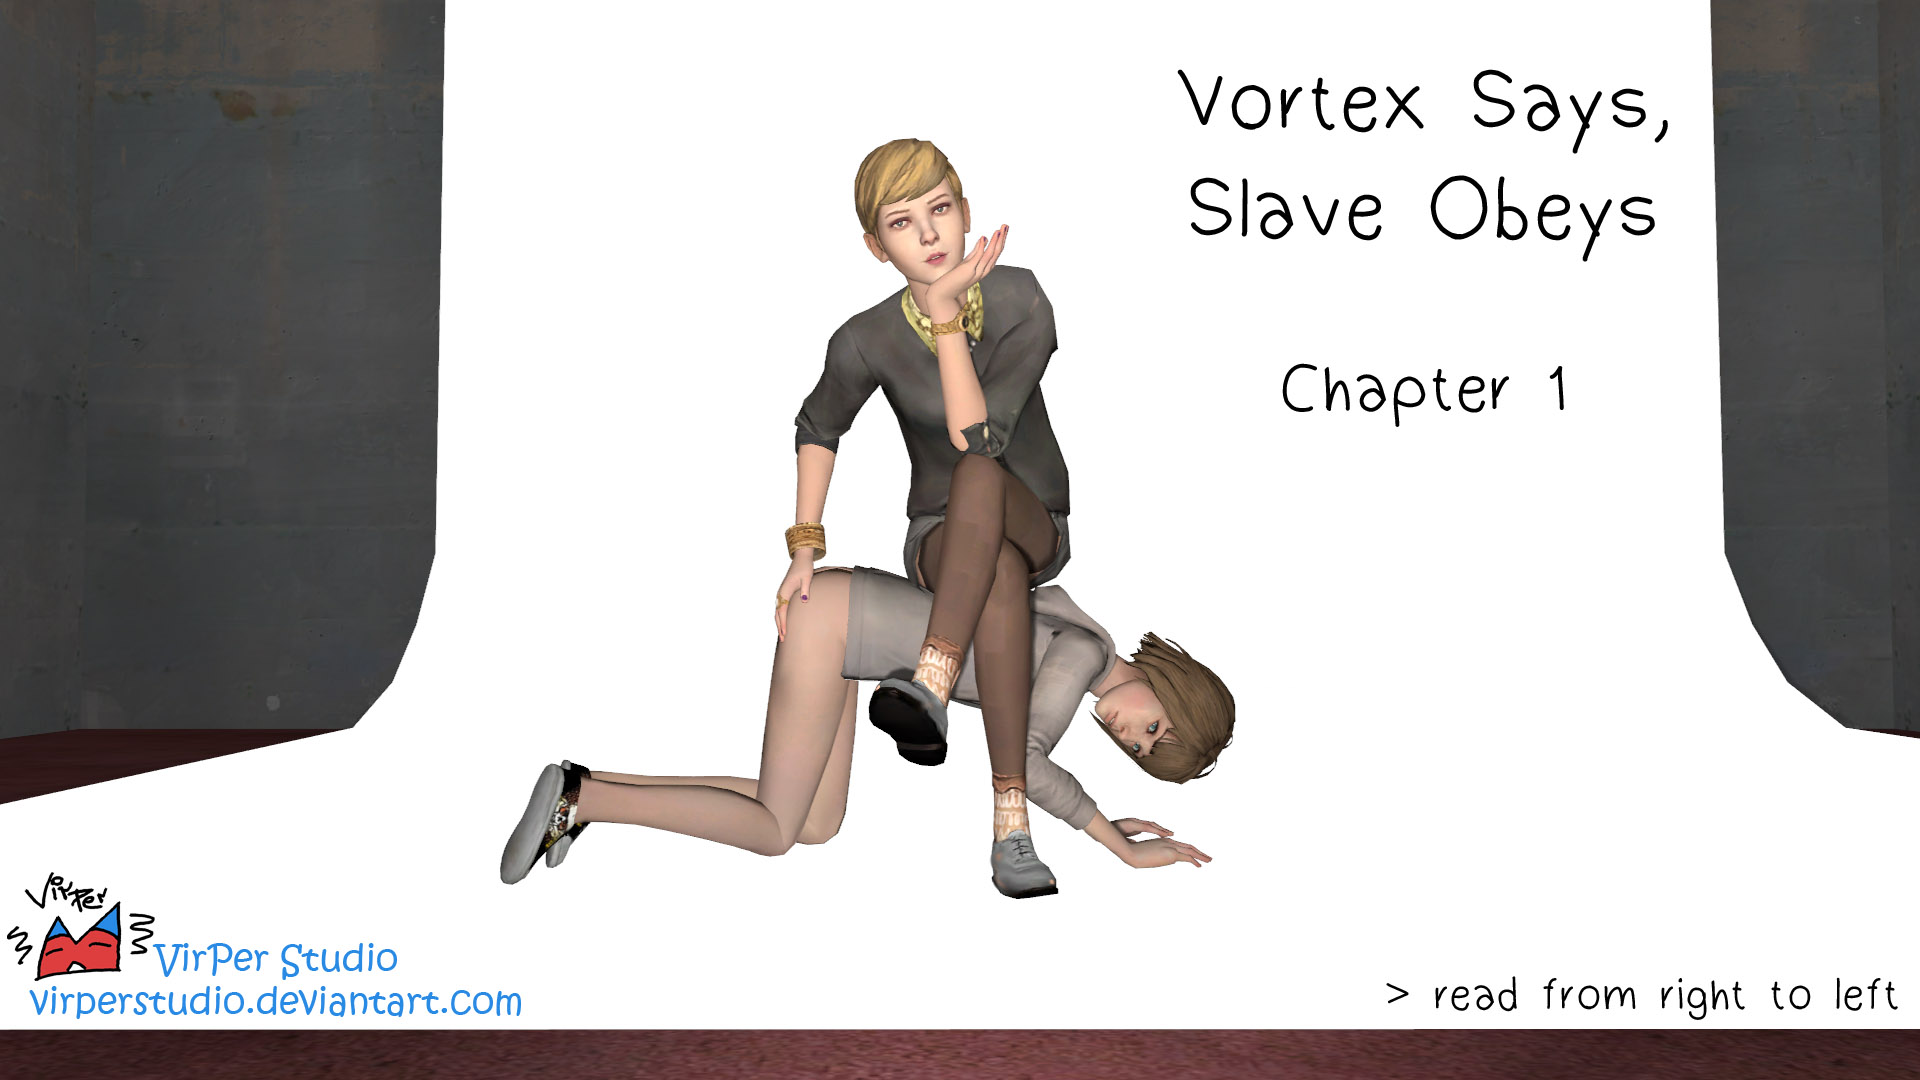 VIRPERSTUDIO - VORTEX SAYS SLAVE OBEYS CHAPTER 1